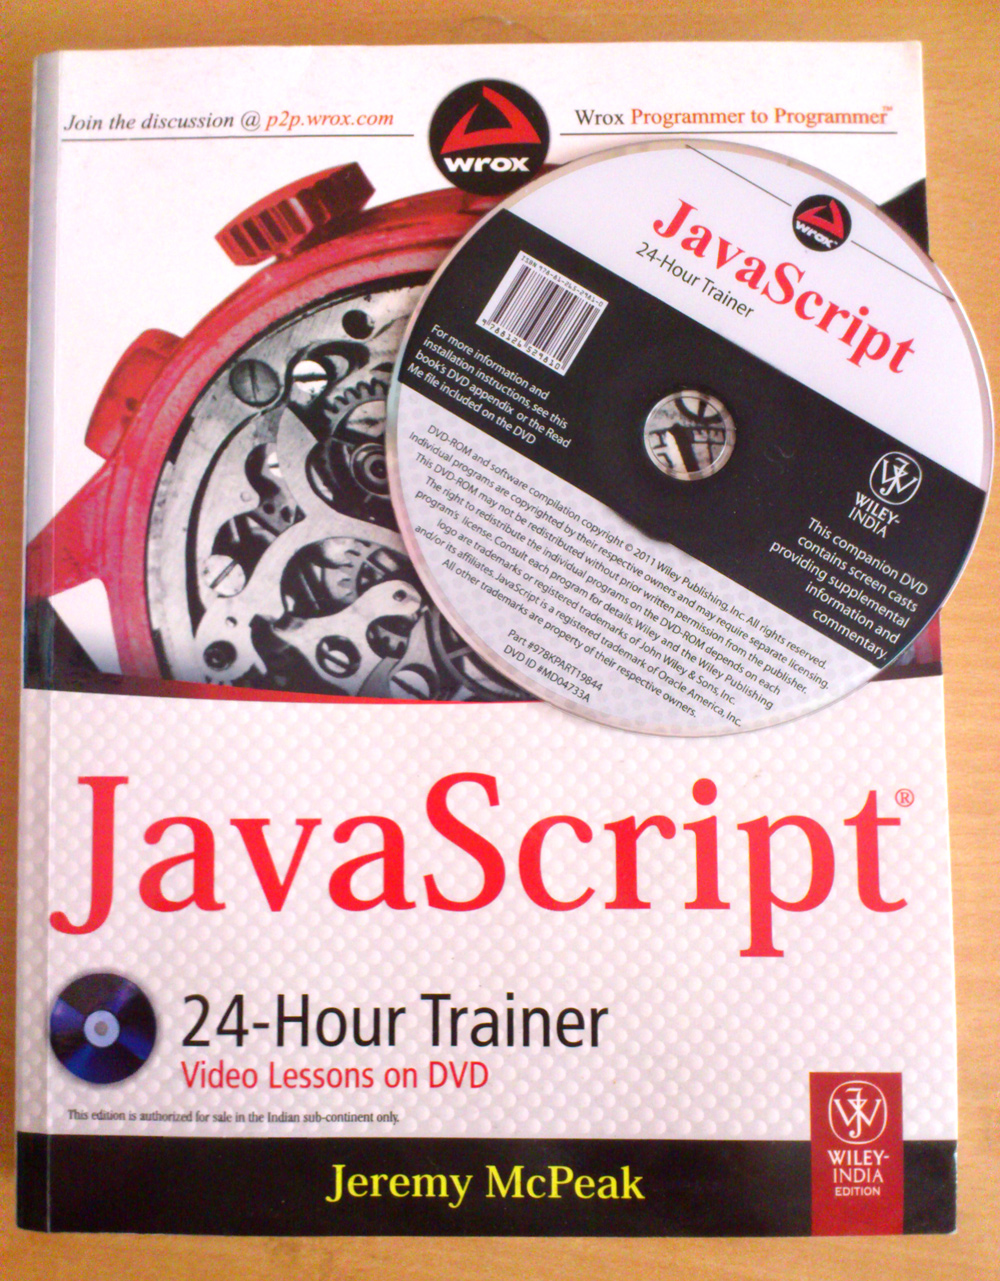 JavaScript 24 Hr. Trainer Book by Jeremy McPeak